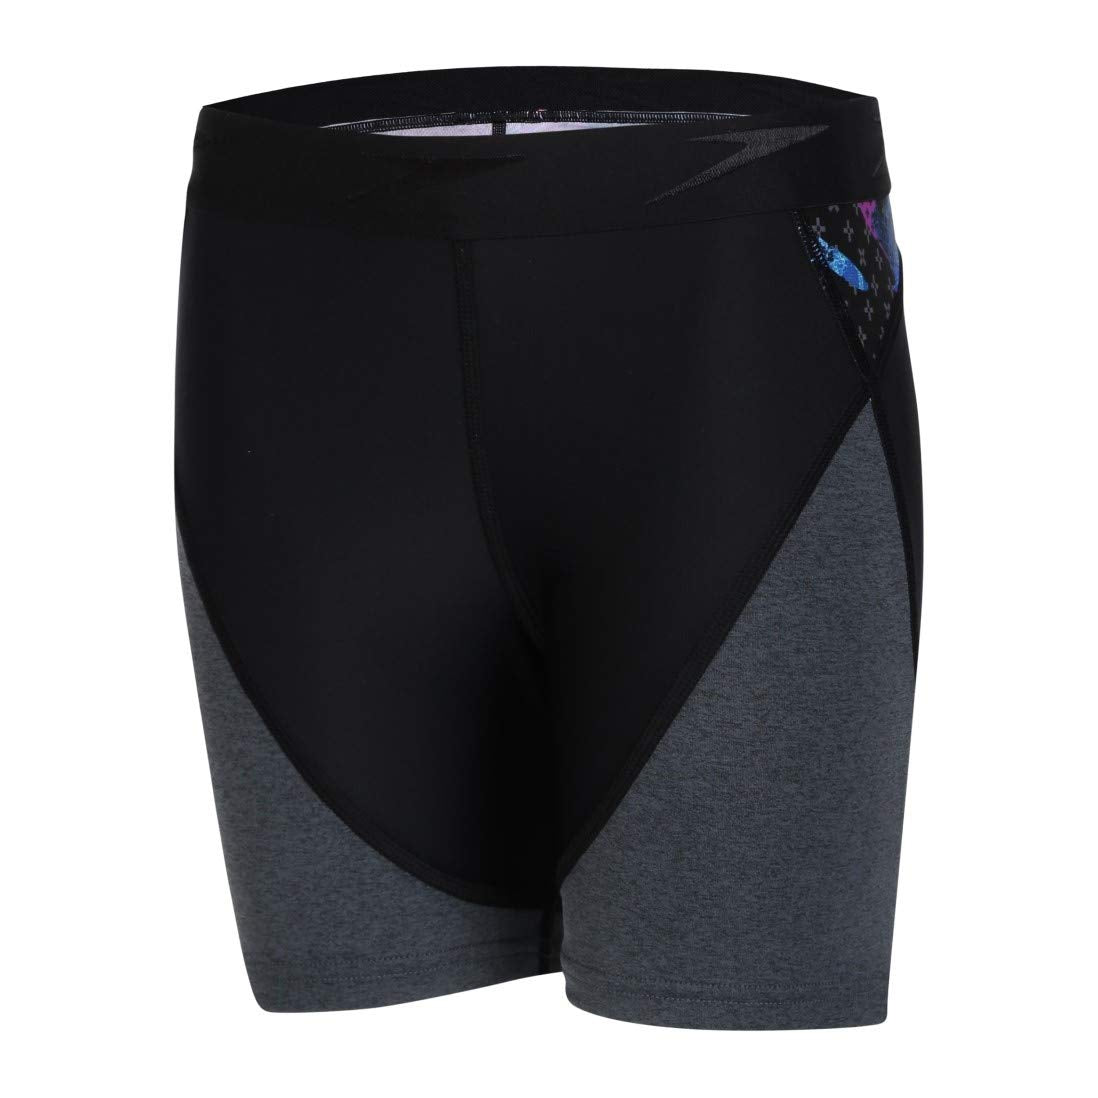 Speedo Sport Shorts Black For Women- Grey - Submarine - Diva - White - Best Price online Prokicksports.com